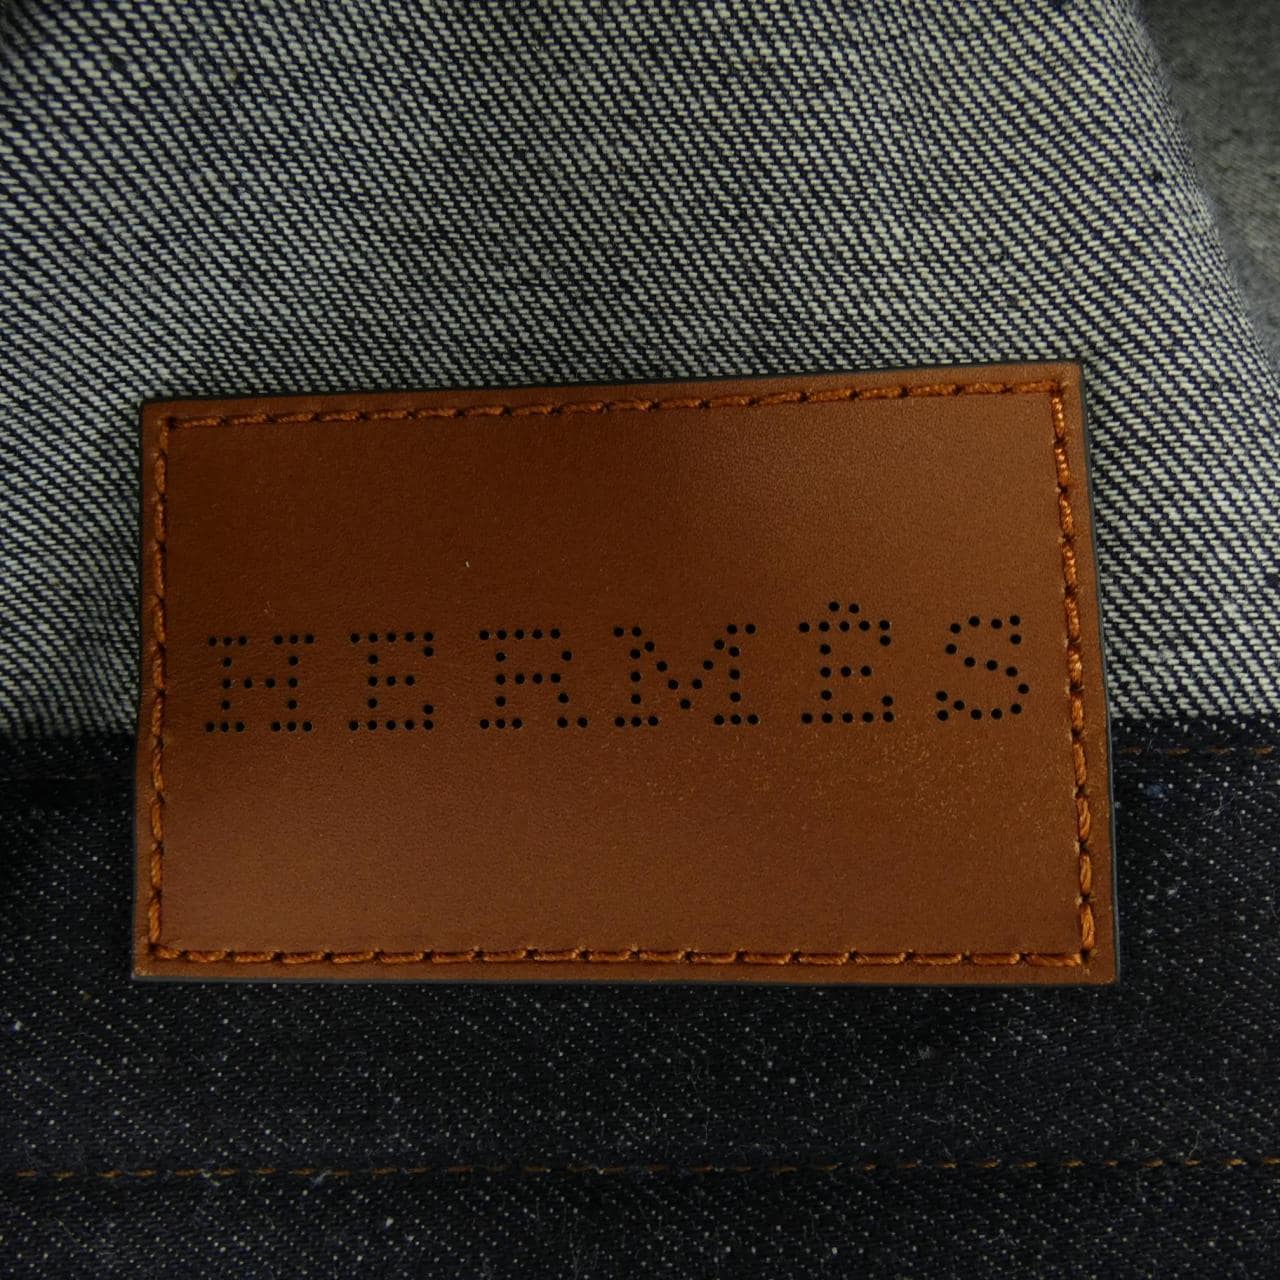 HERMES HERMES Denim Jacket